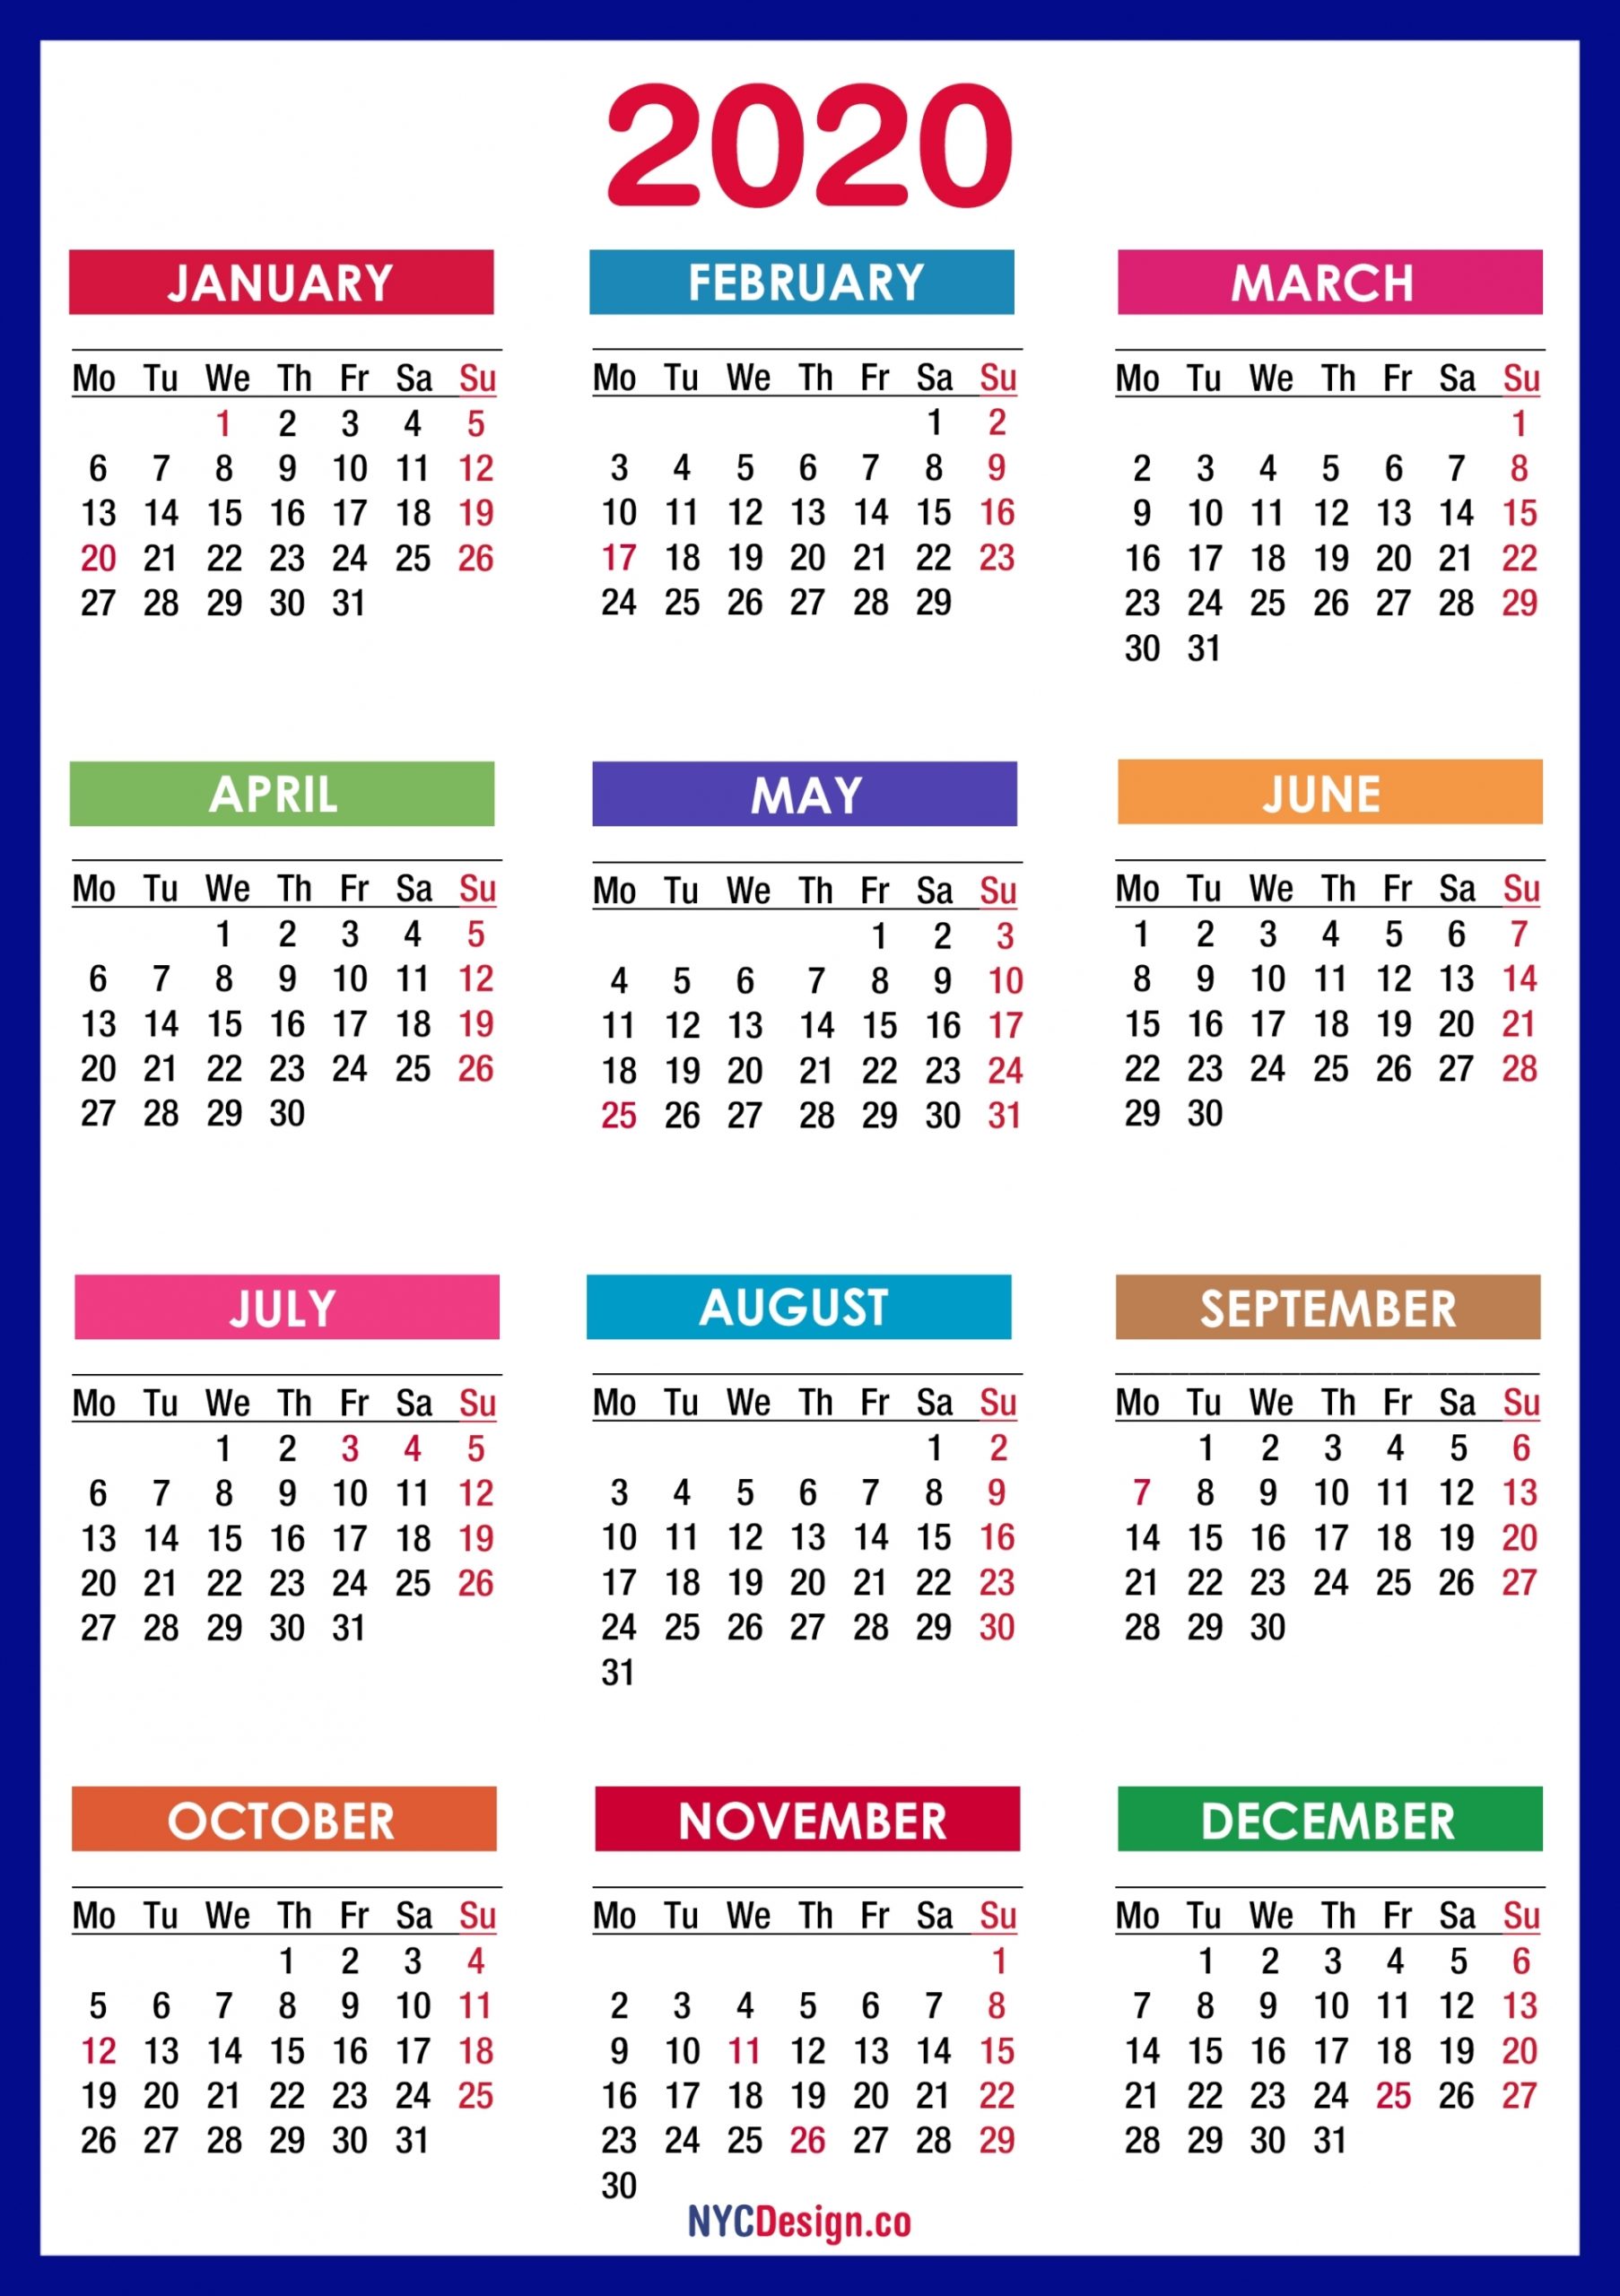 2020 Calendar Pdf Free